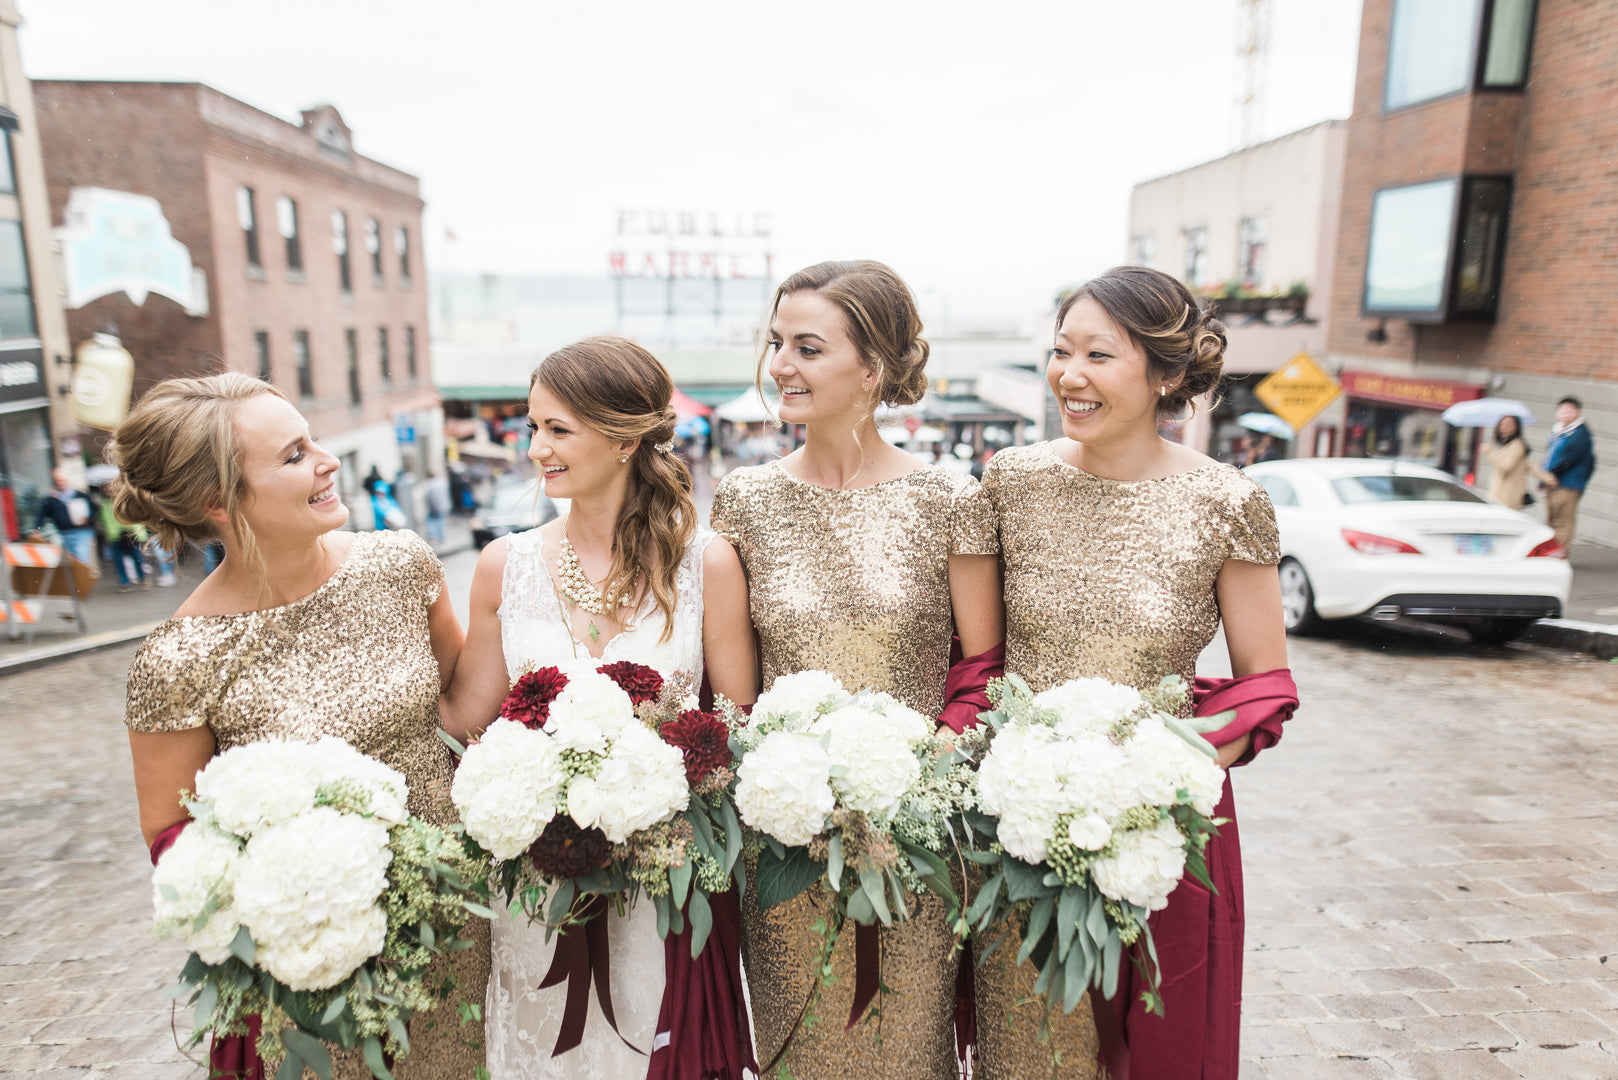 | An Adventurous Travel Themed Wedding | Kate Aspen